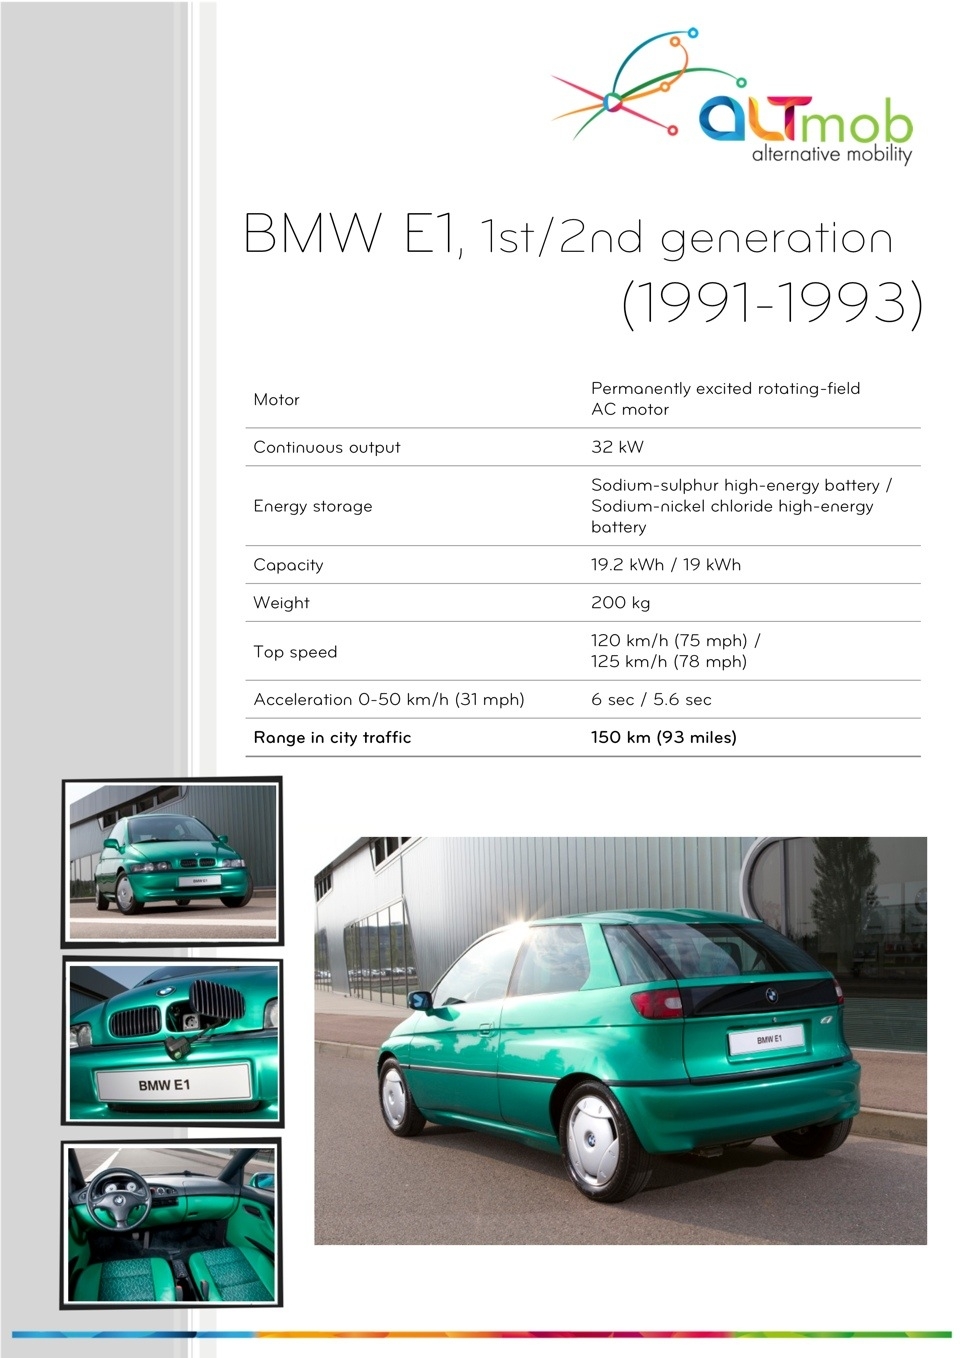 BMW E1 Electric